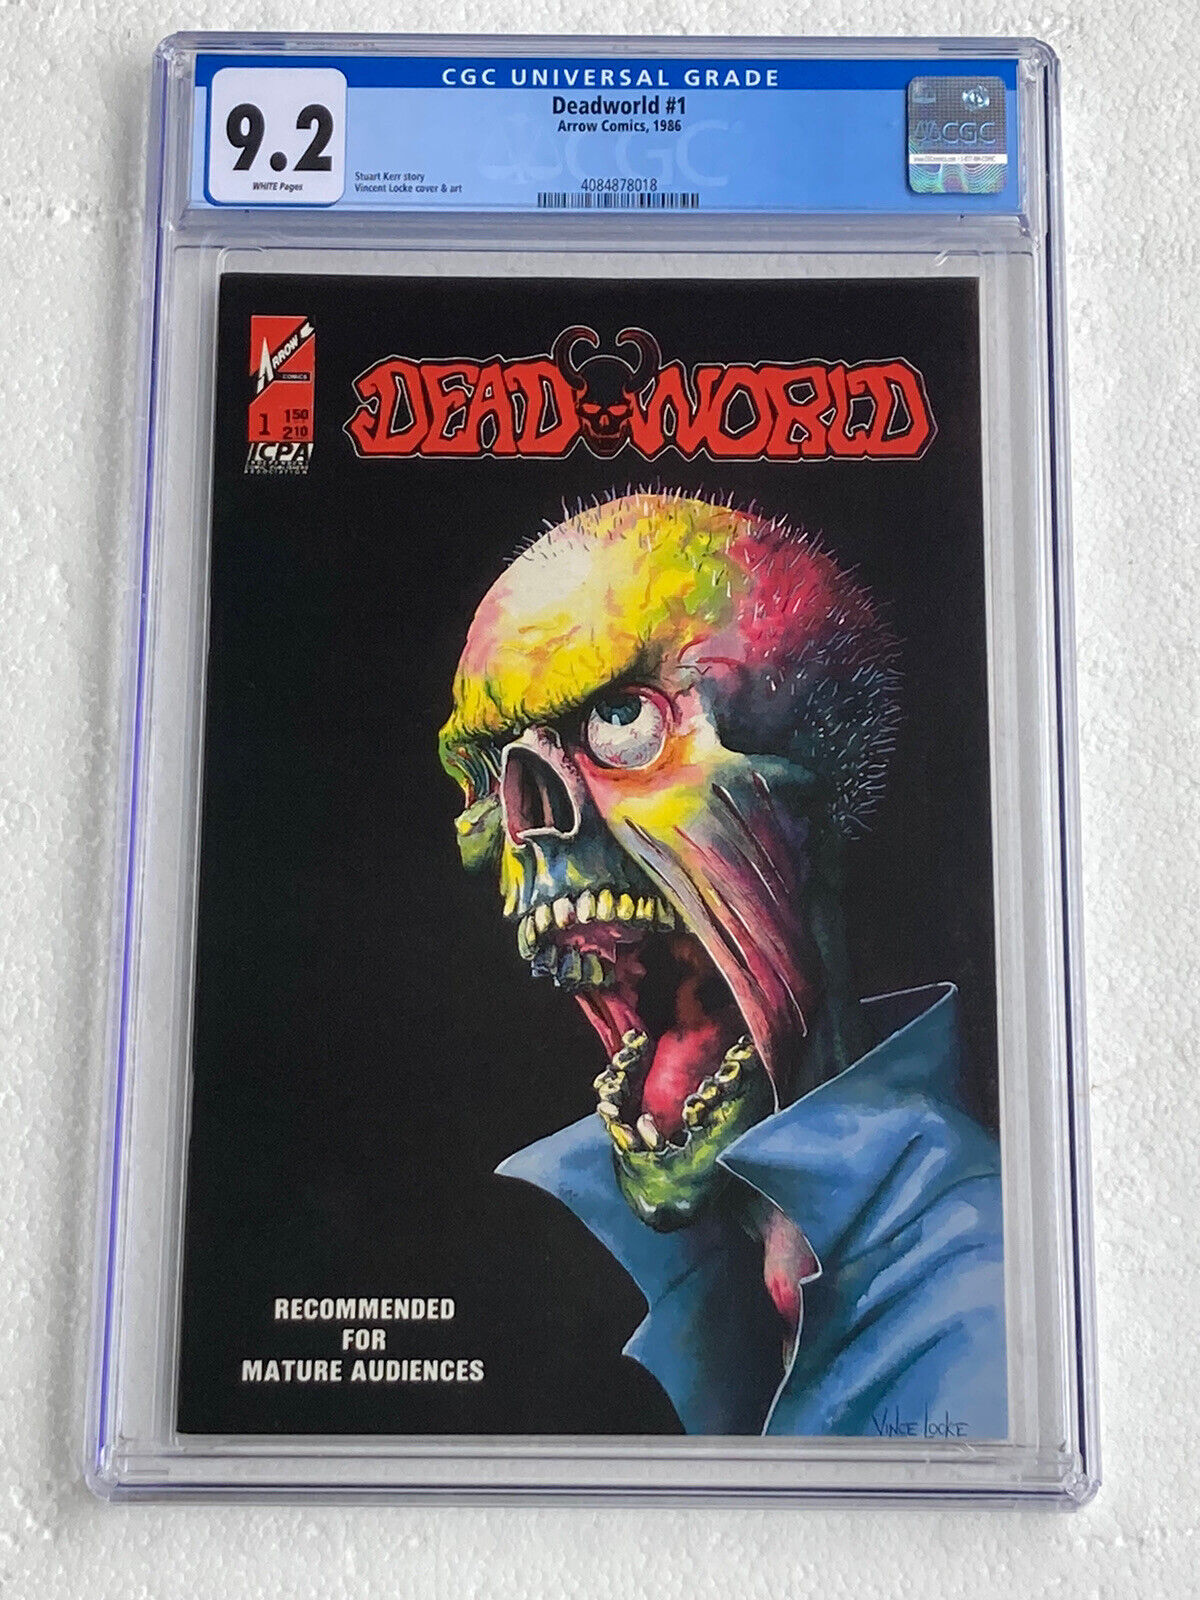 DEAD WORLD #1 CGC 9.2 NM- ARROW COMICS 1986 WP HORROR ZOMBIE SKULL MATURE